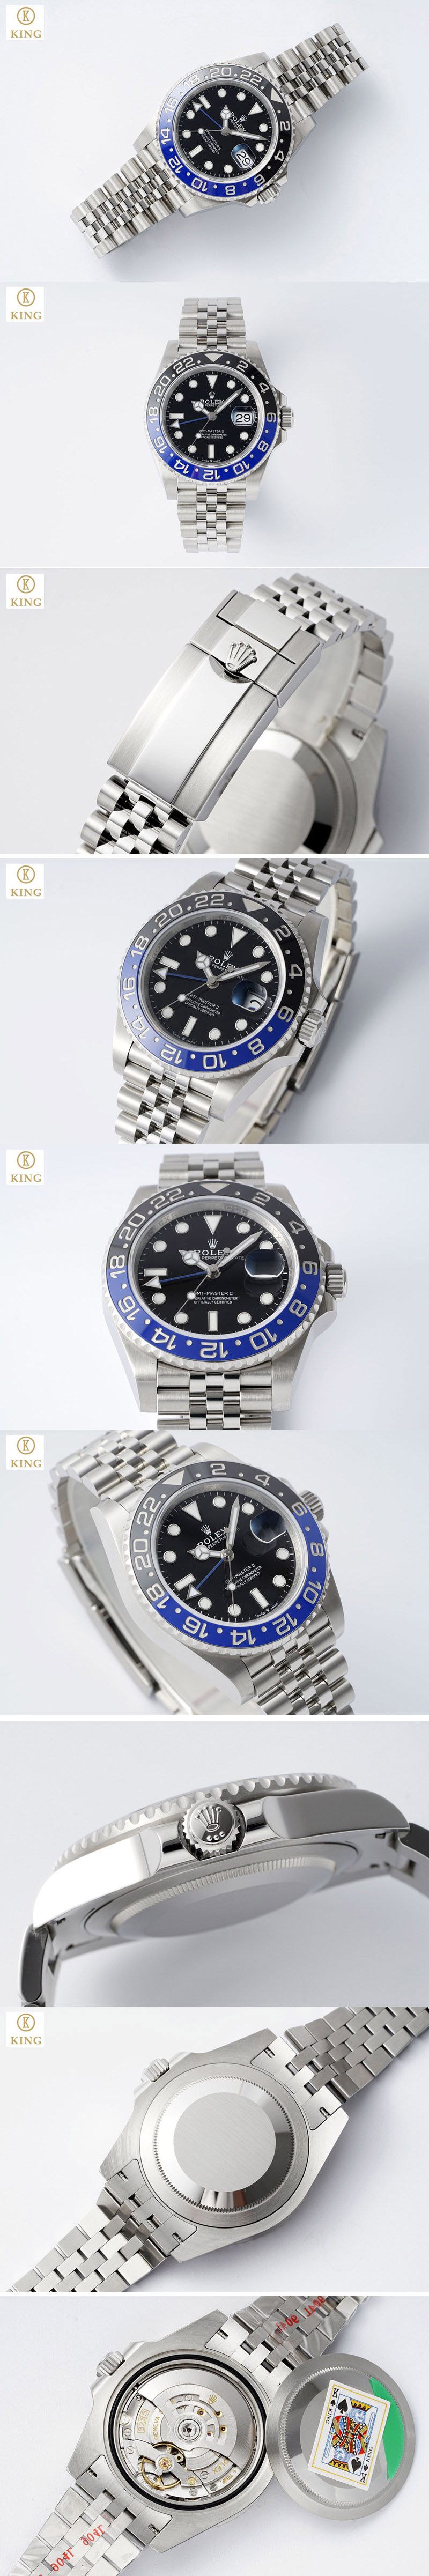 Replica Rolex GMT Master II 126710 BLNR 904L SS KING Factory 1:1 Best Edition on Jubilee Bracelet K3285 CHS